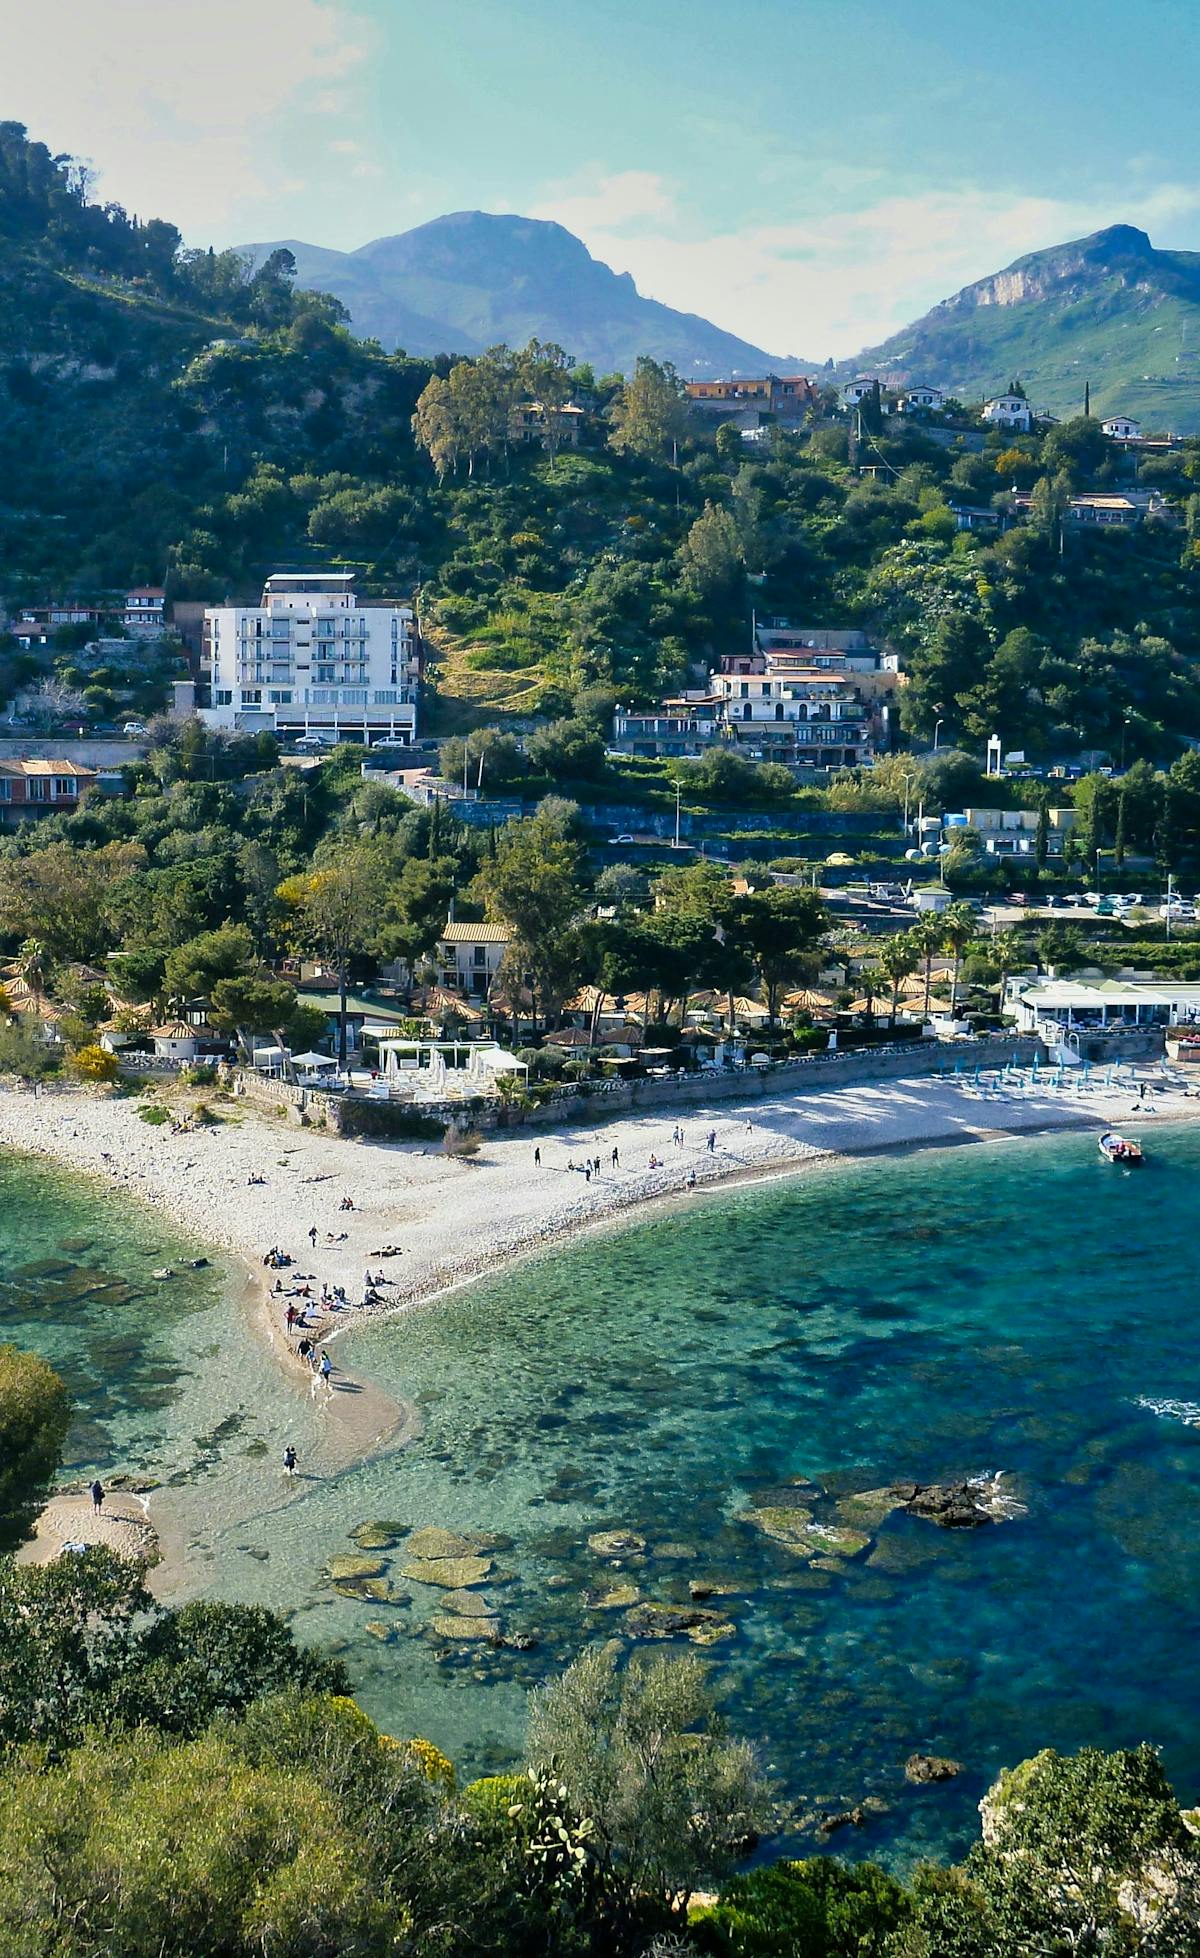 Sea view of Taormina